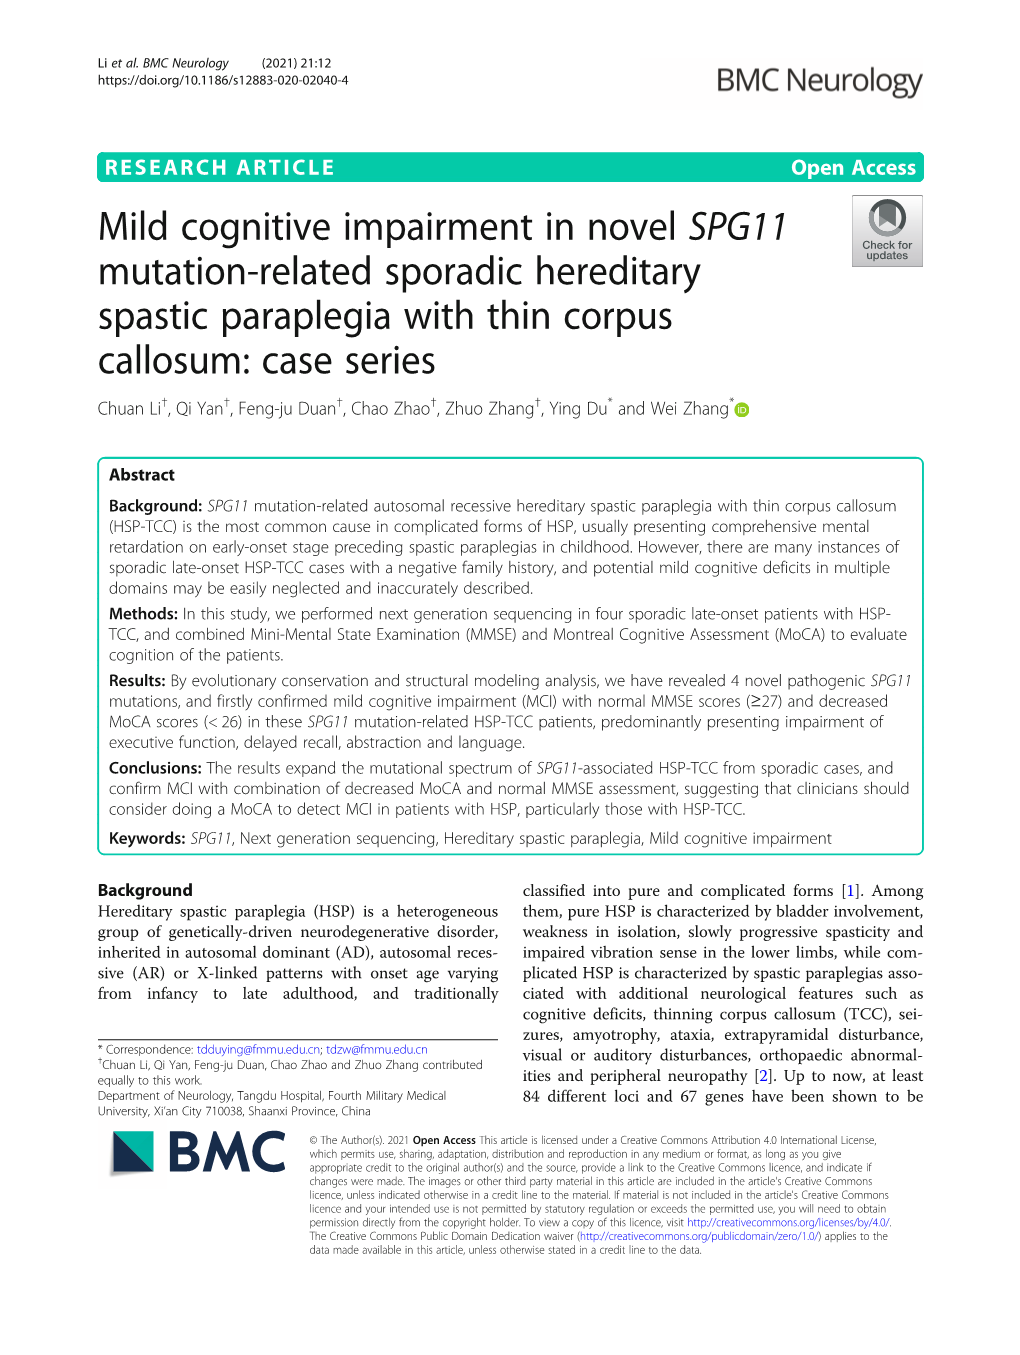 Mild Cognitive Impairment in Novel SPG11 Mutation-Related Sporadic Hereditary Spastic Paraplegia with Thin Corpus Callosum